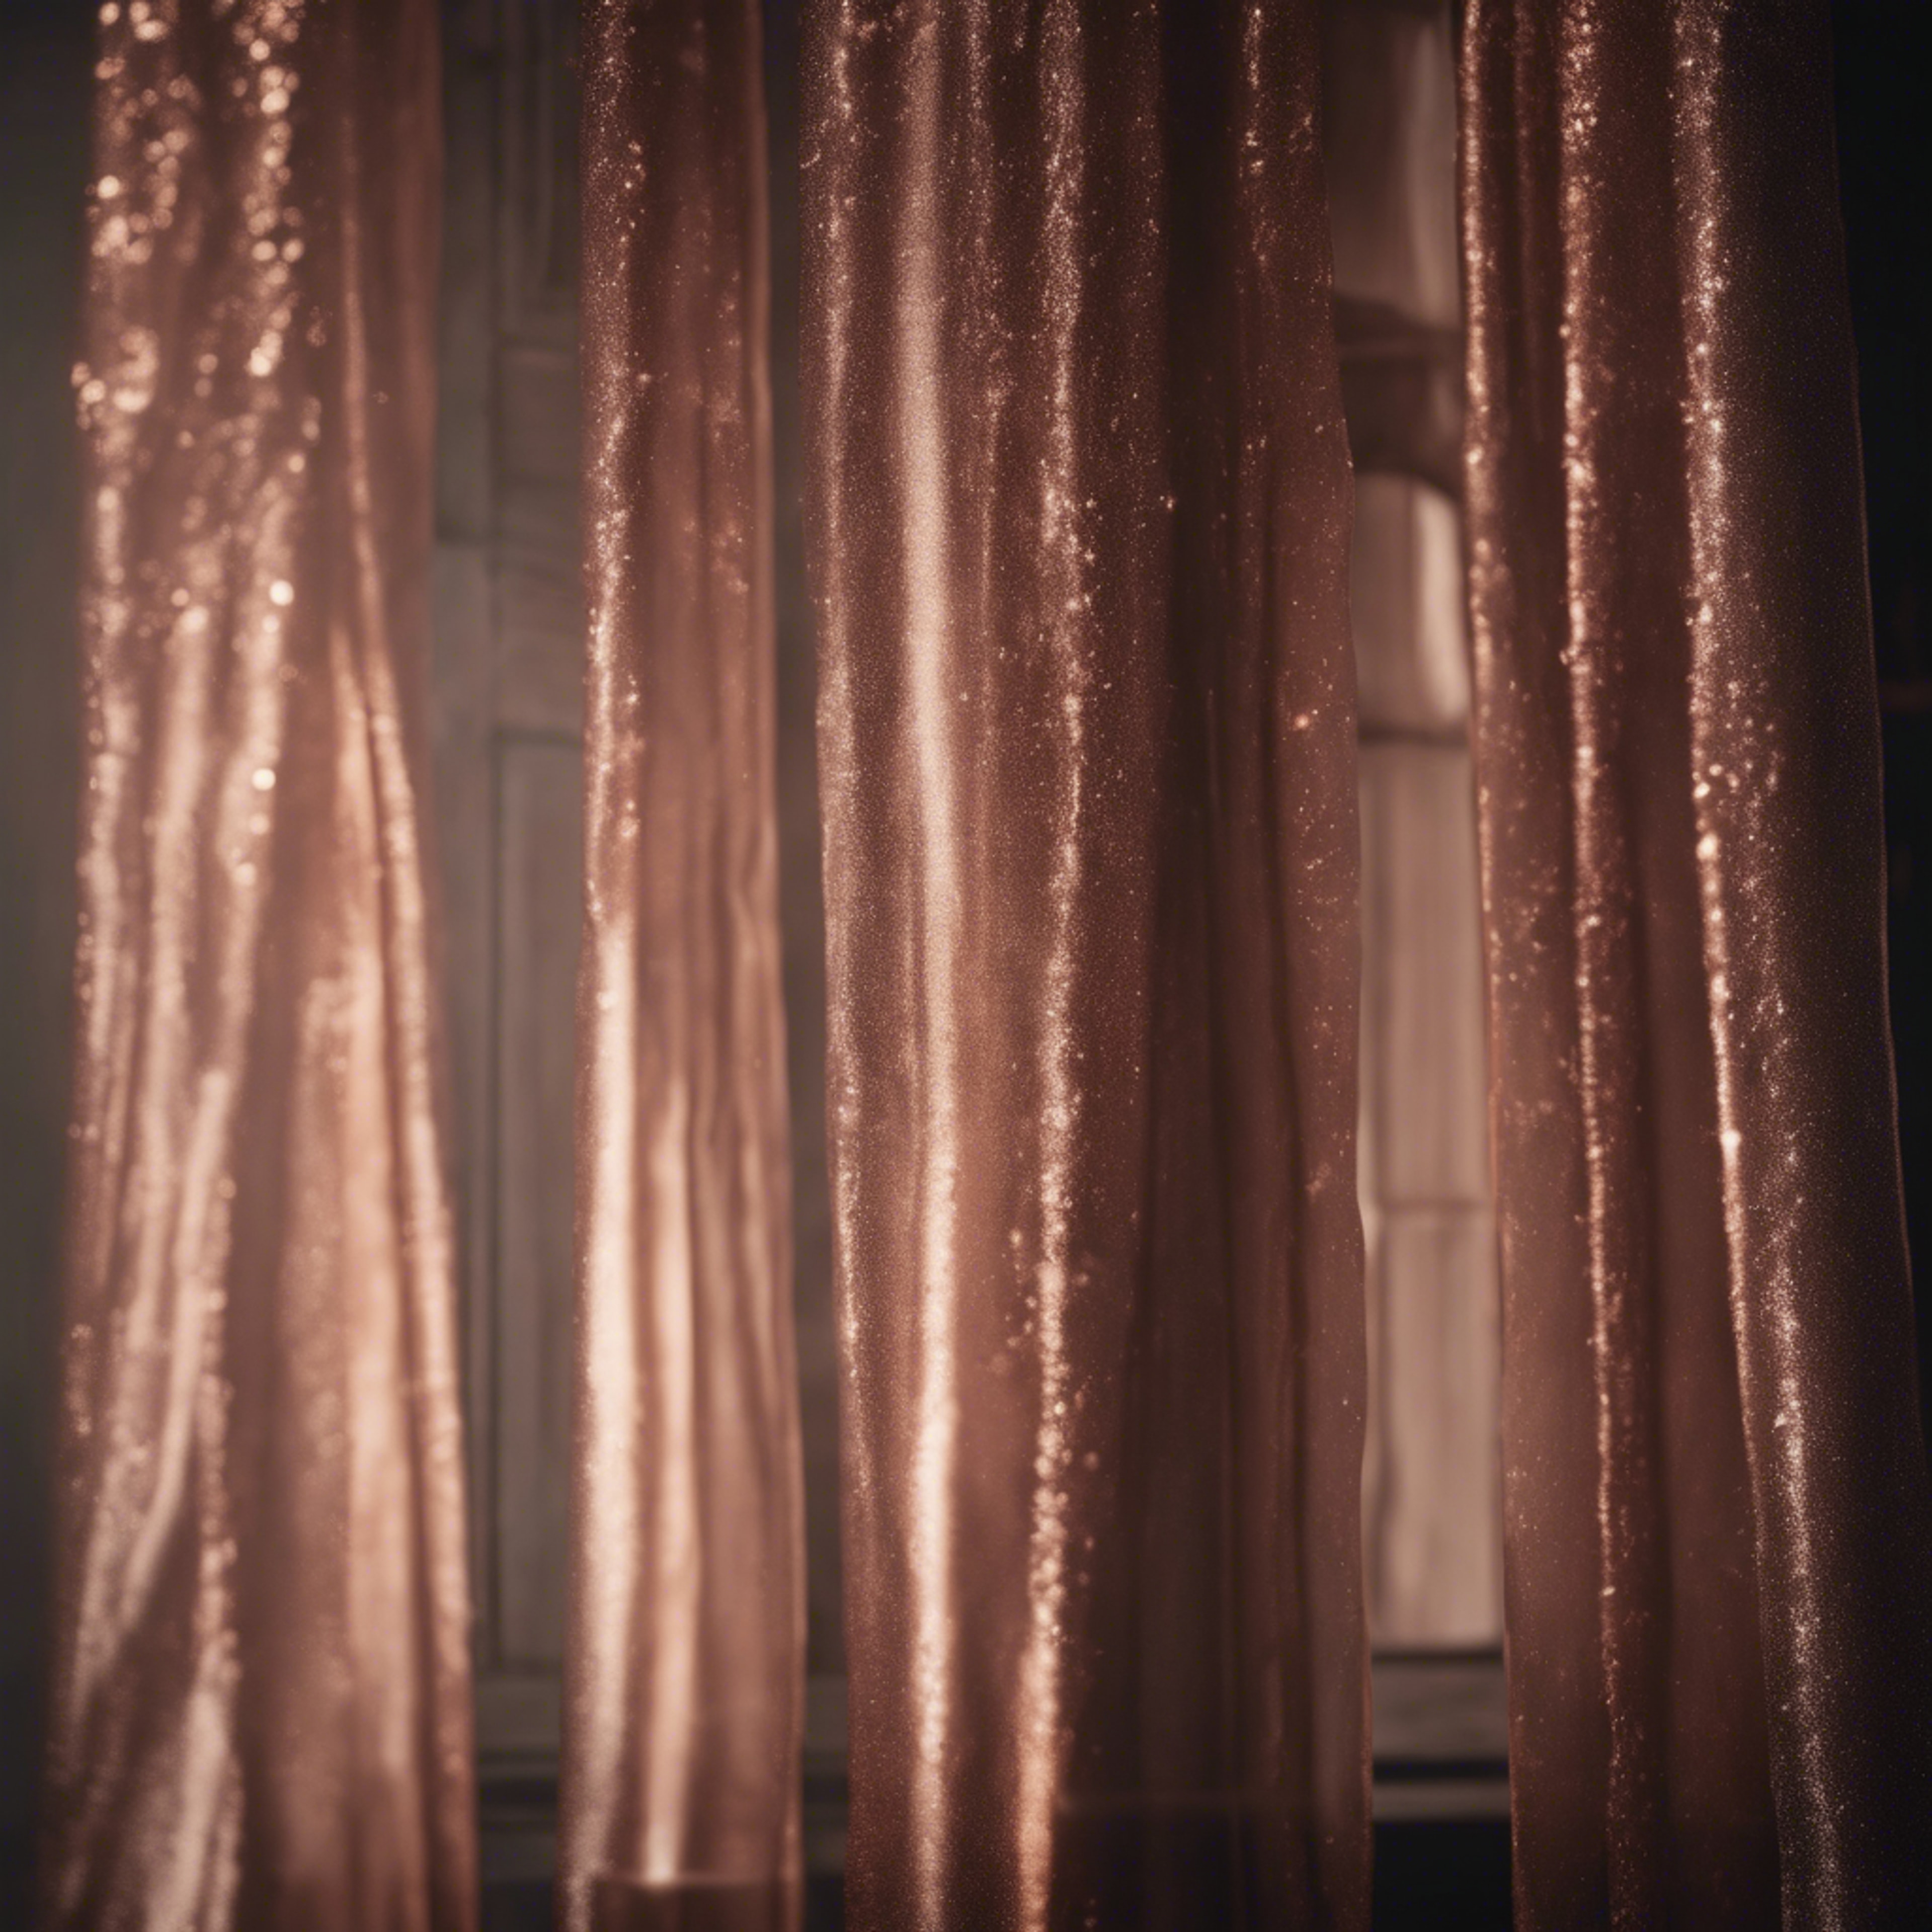 A lush rose gold curtain falling gracefully against a dark, wooden floor. Wallpaper[2a1d745c8031439ca98c]